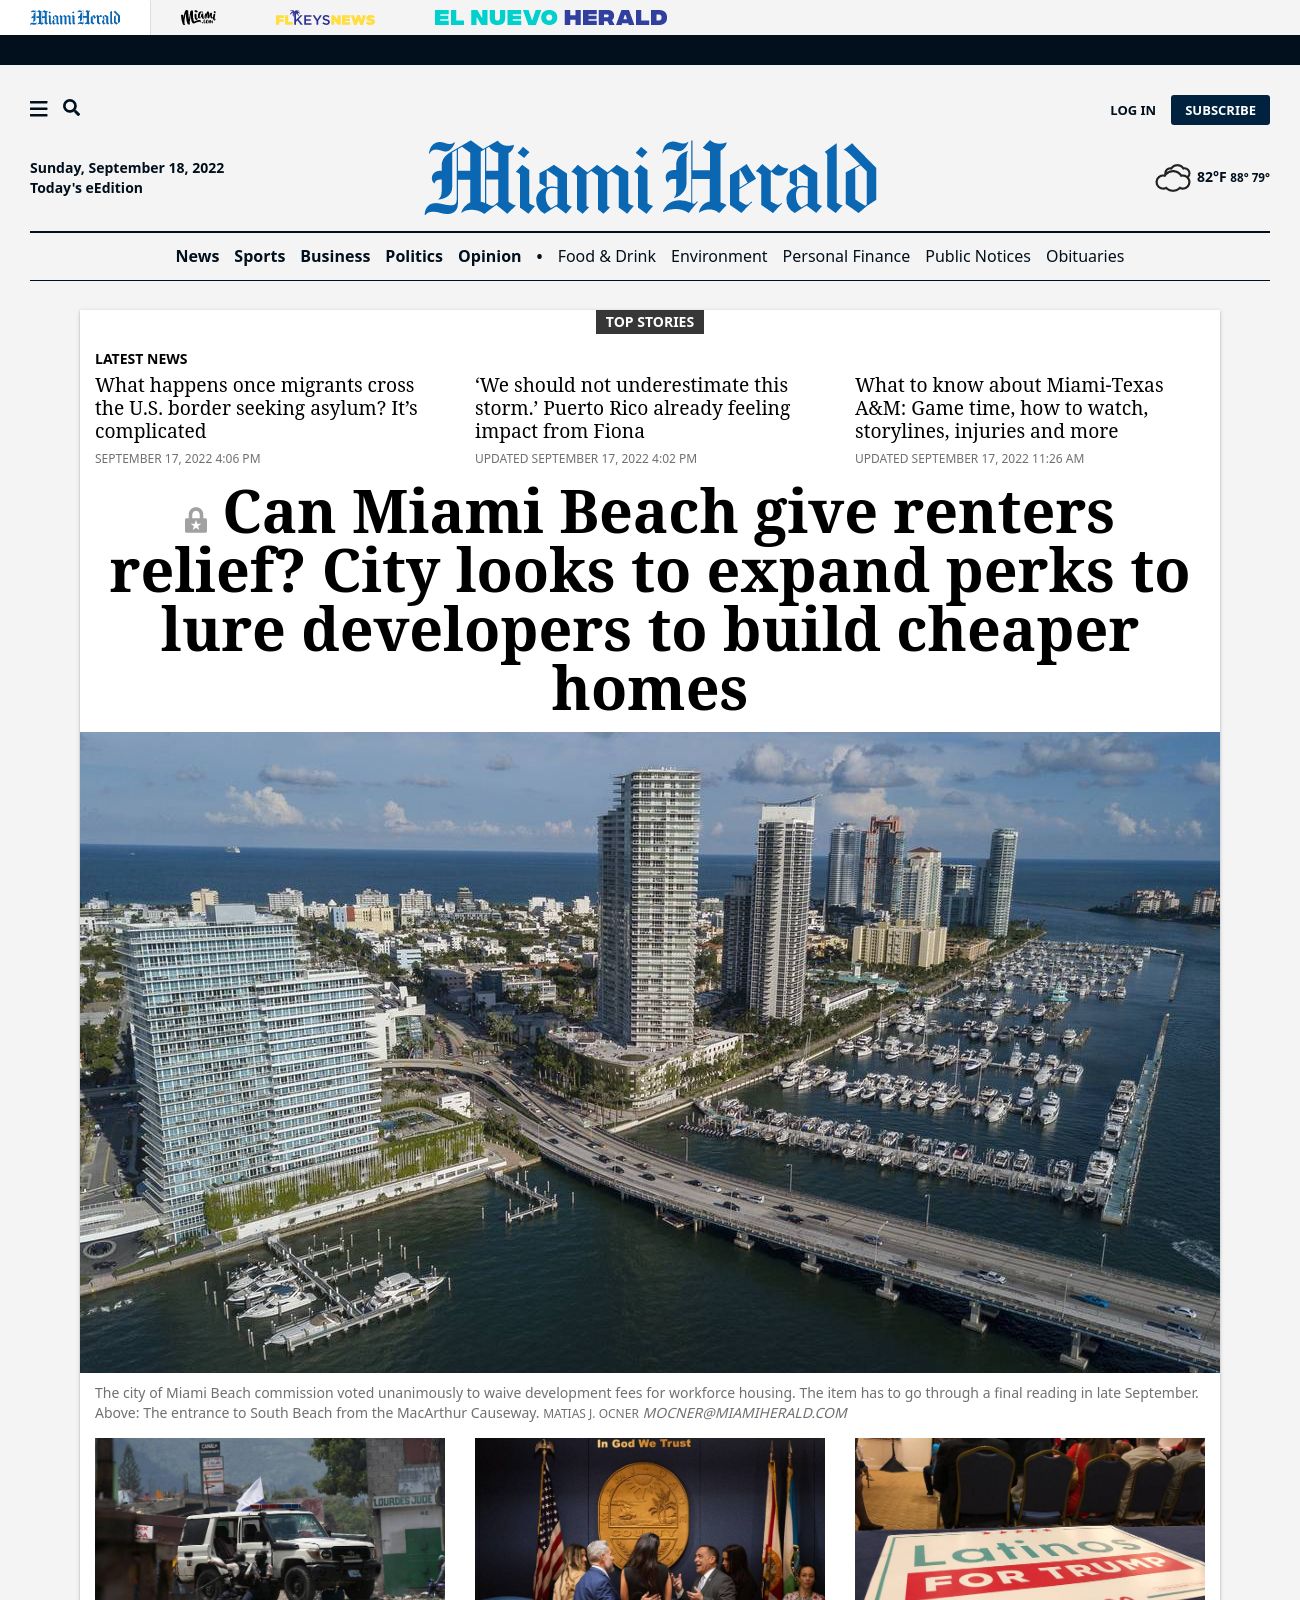 Miami Herald at 2022-09-17 21:17:42-04:00 local time